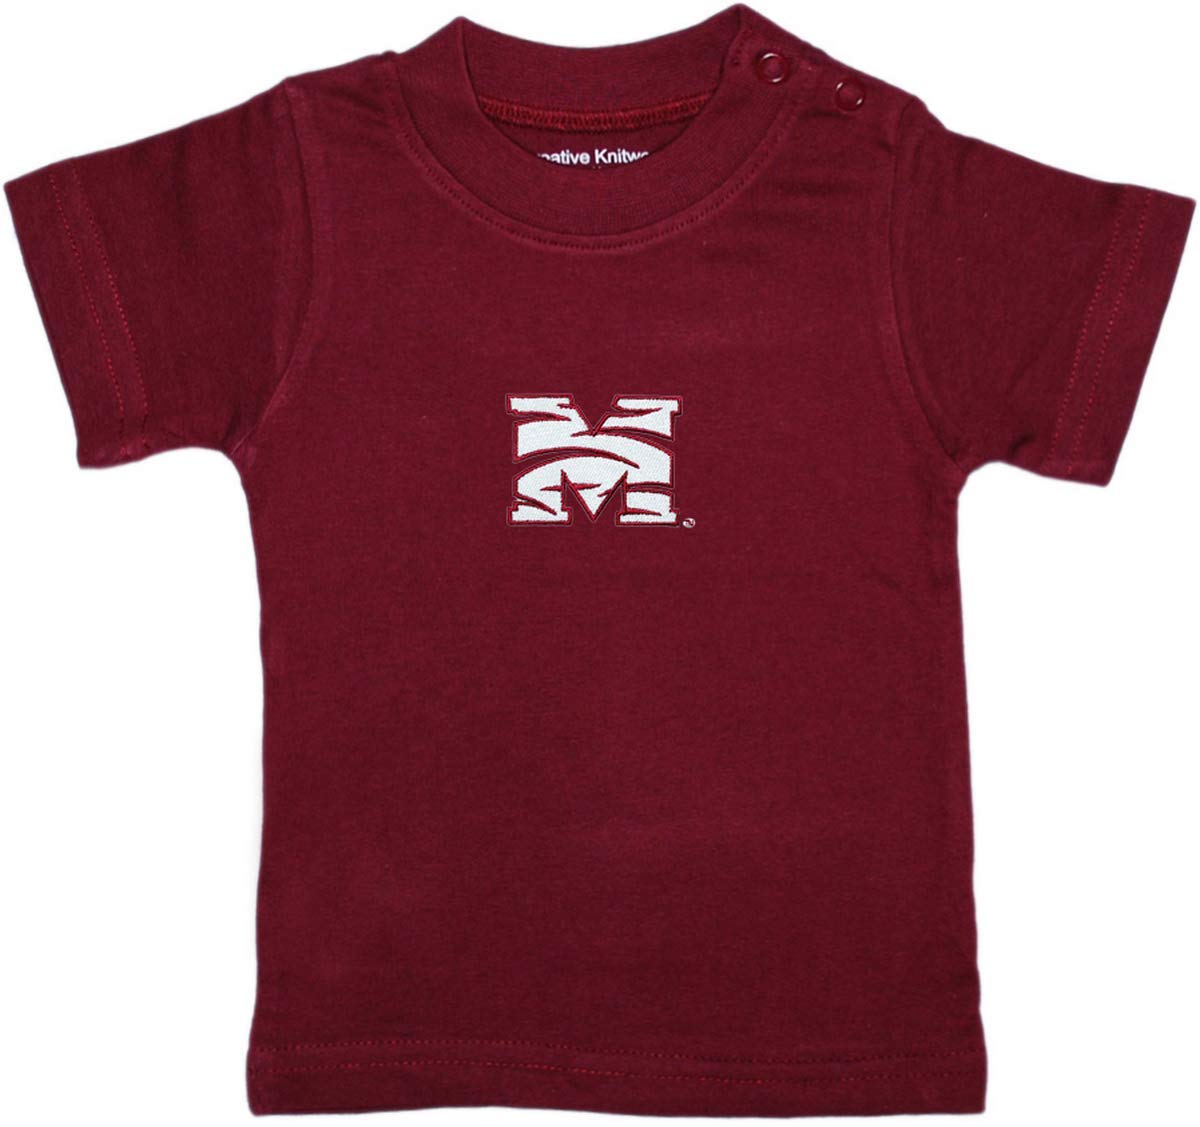 Creative Knitwear Arizona State Baby and Toddler T-Shirt